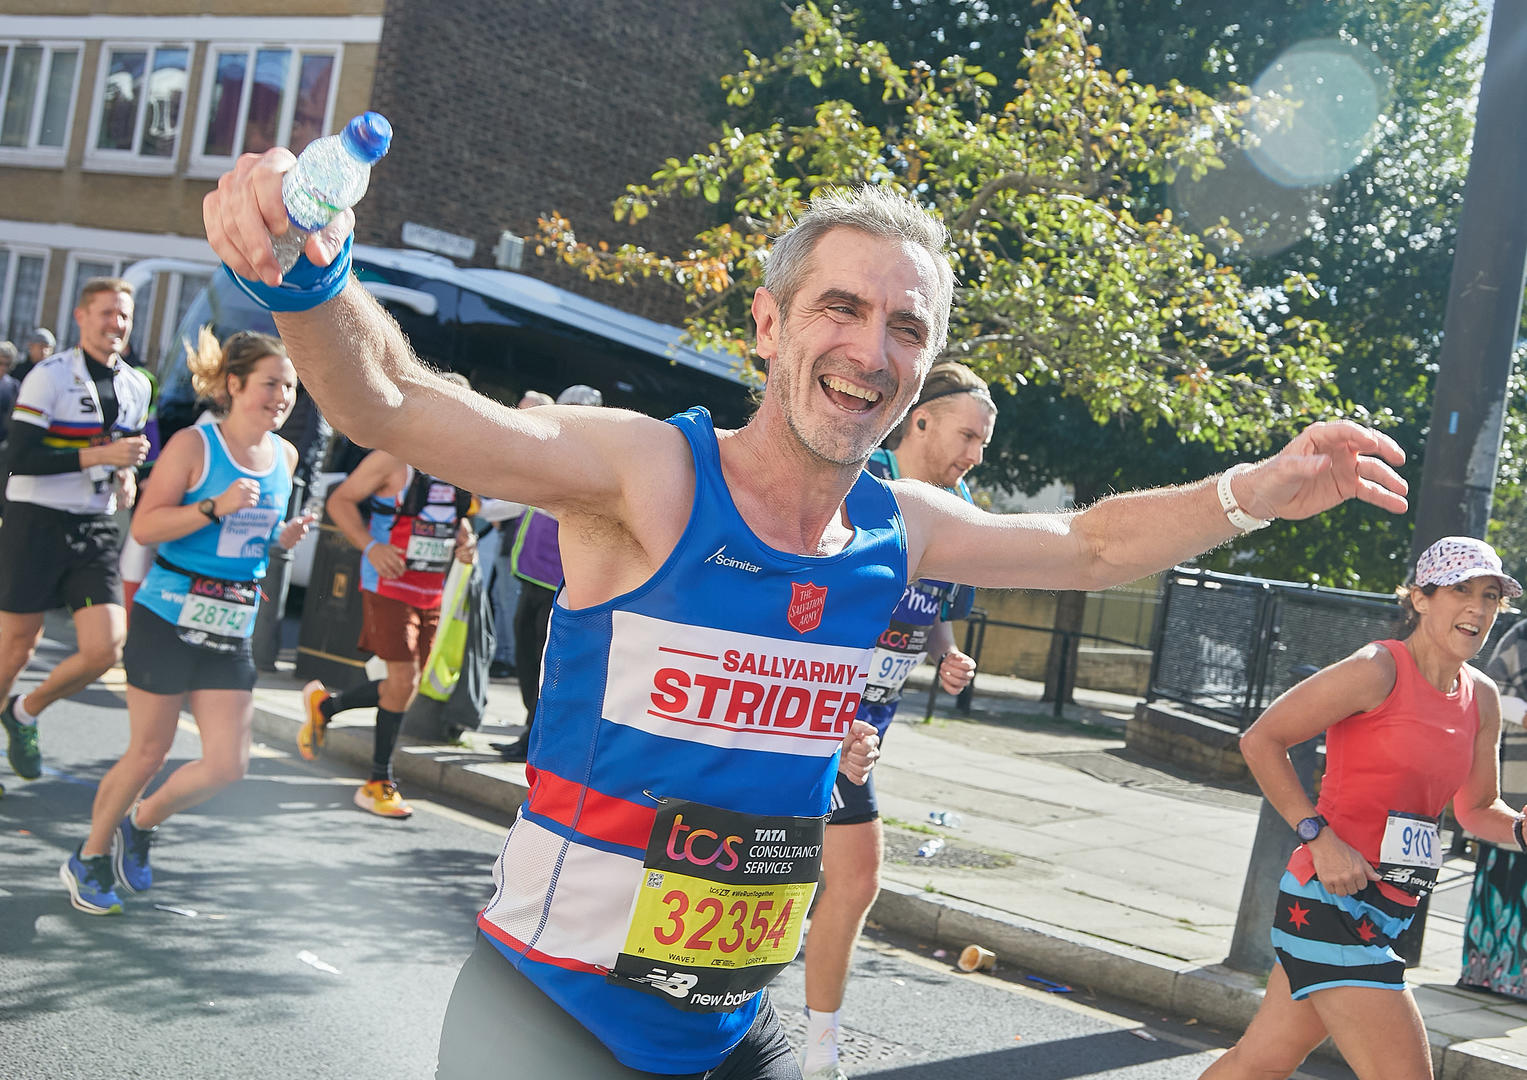 Man cheering as he runs the London Marathon wearing a Team Sally Army vest